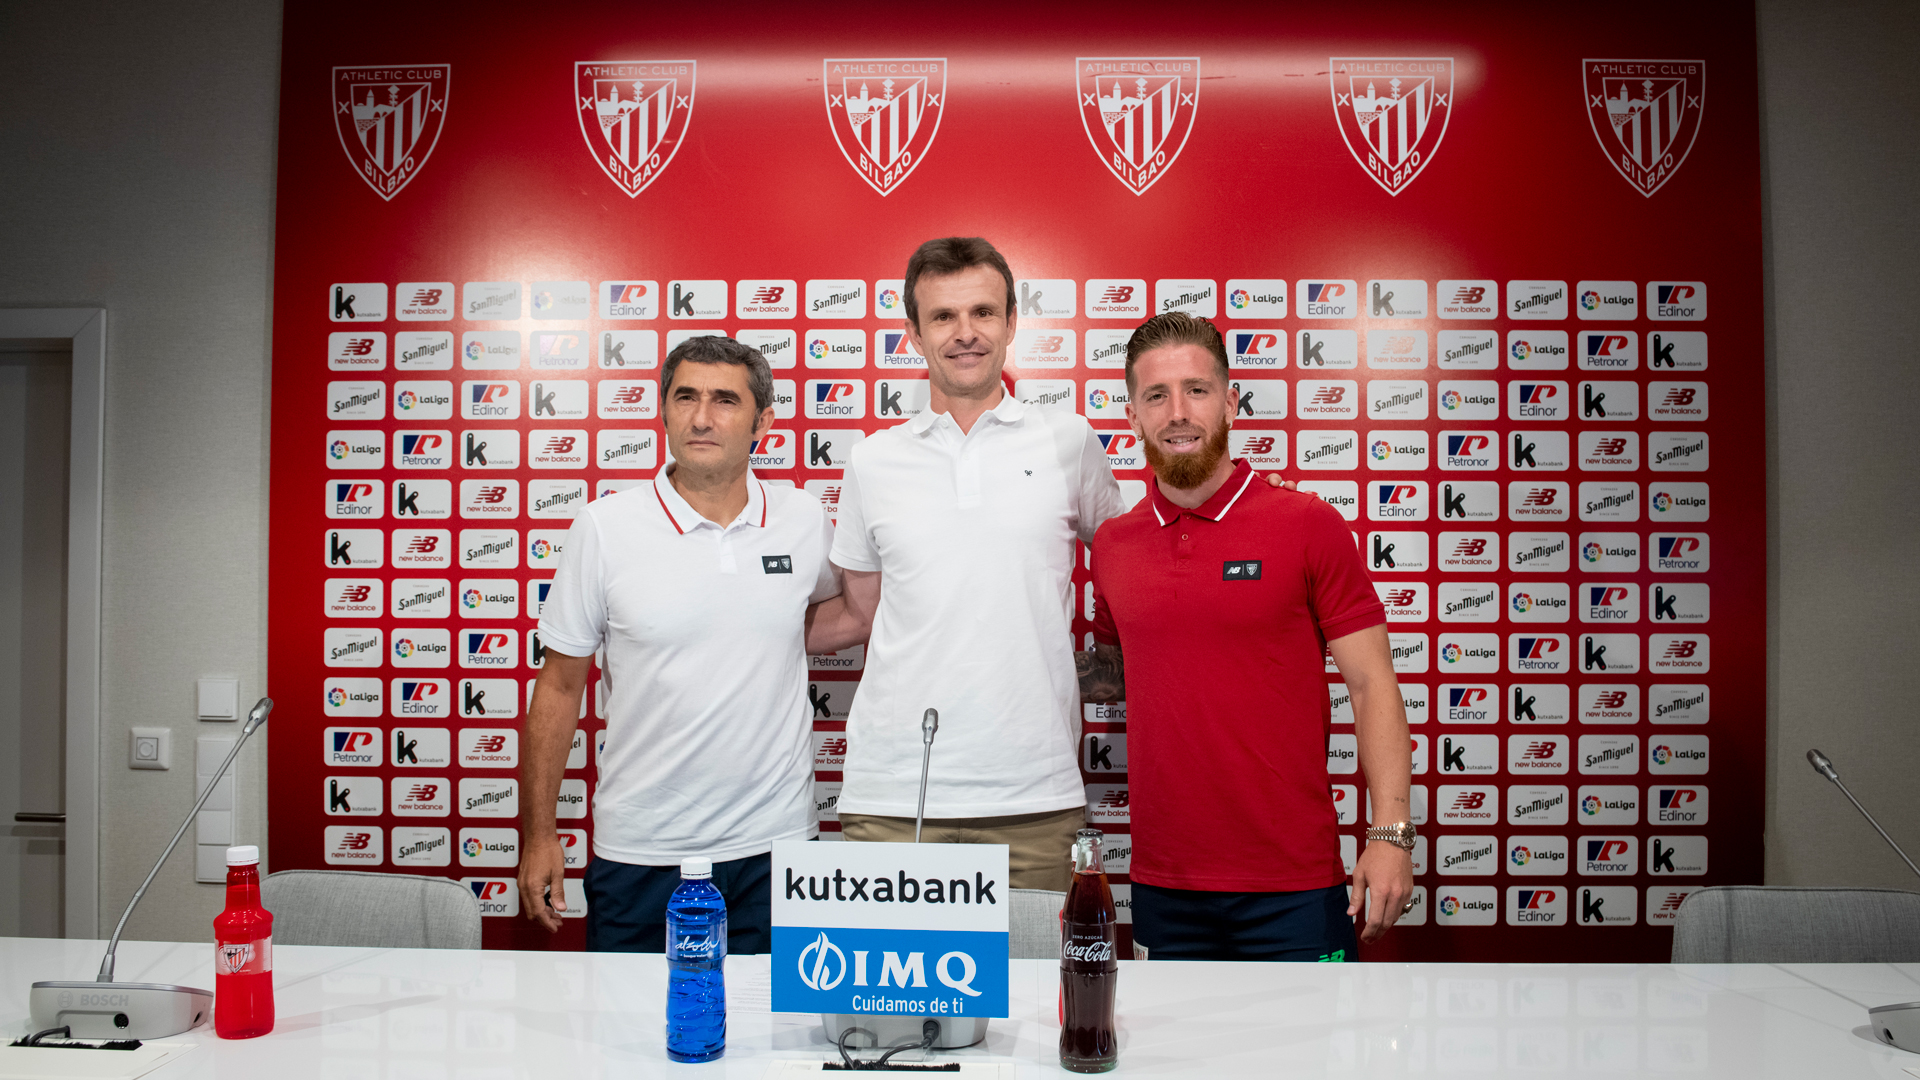 Jon Uriarte, Valverde and Muniain press conference